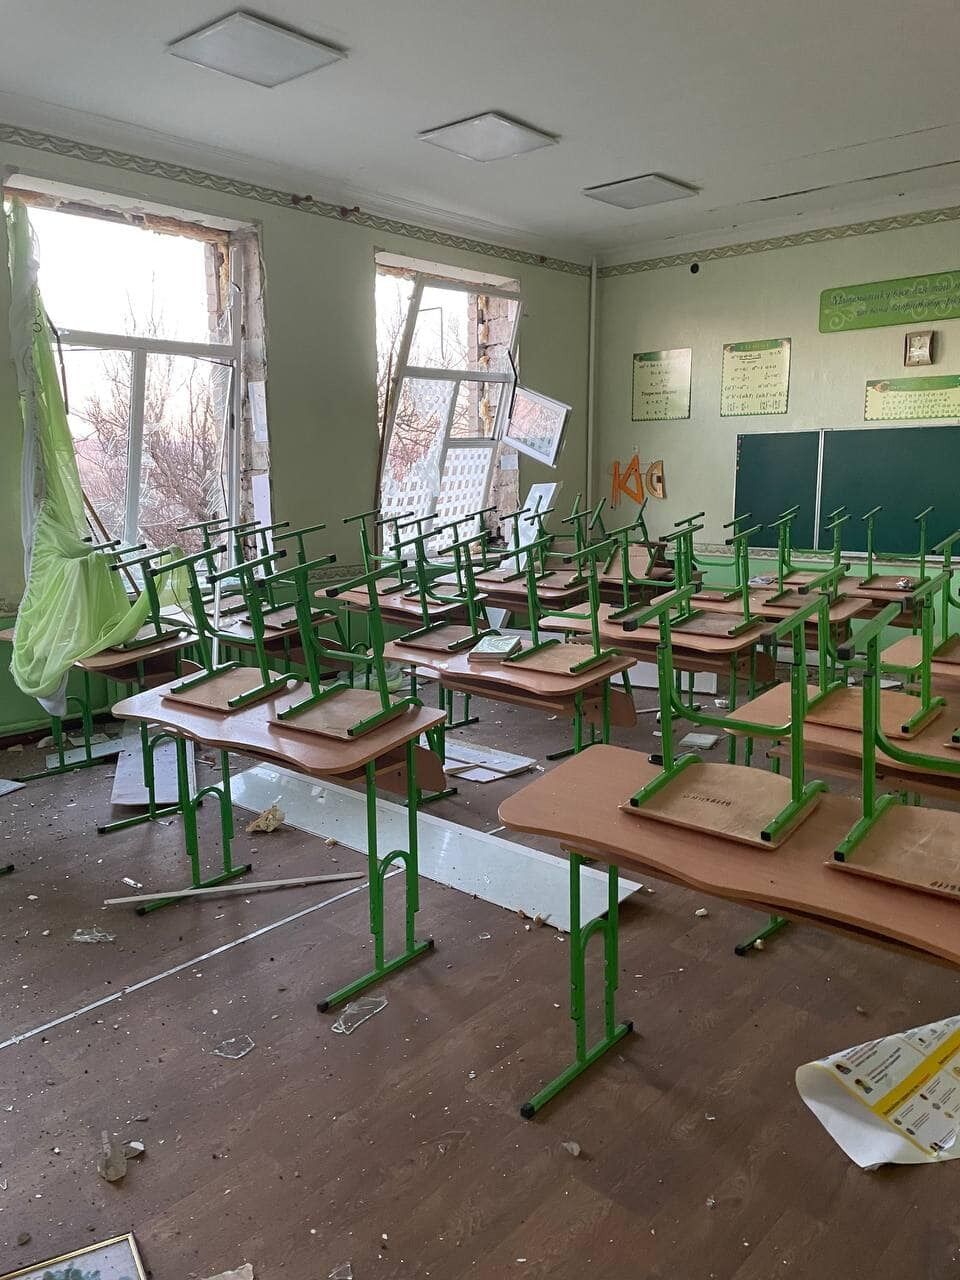 Войска РФ ударили ракетами по школе в Краматорске, где обустроили ''пункт несокрушимости''. Фото и видео